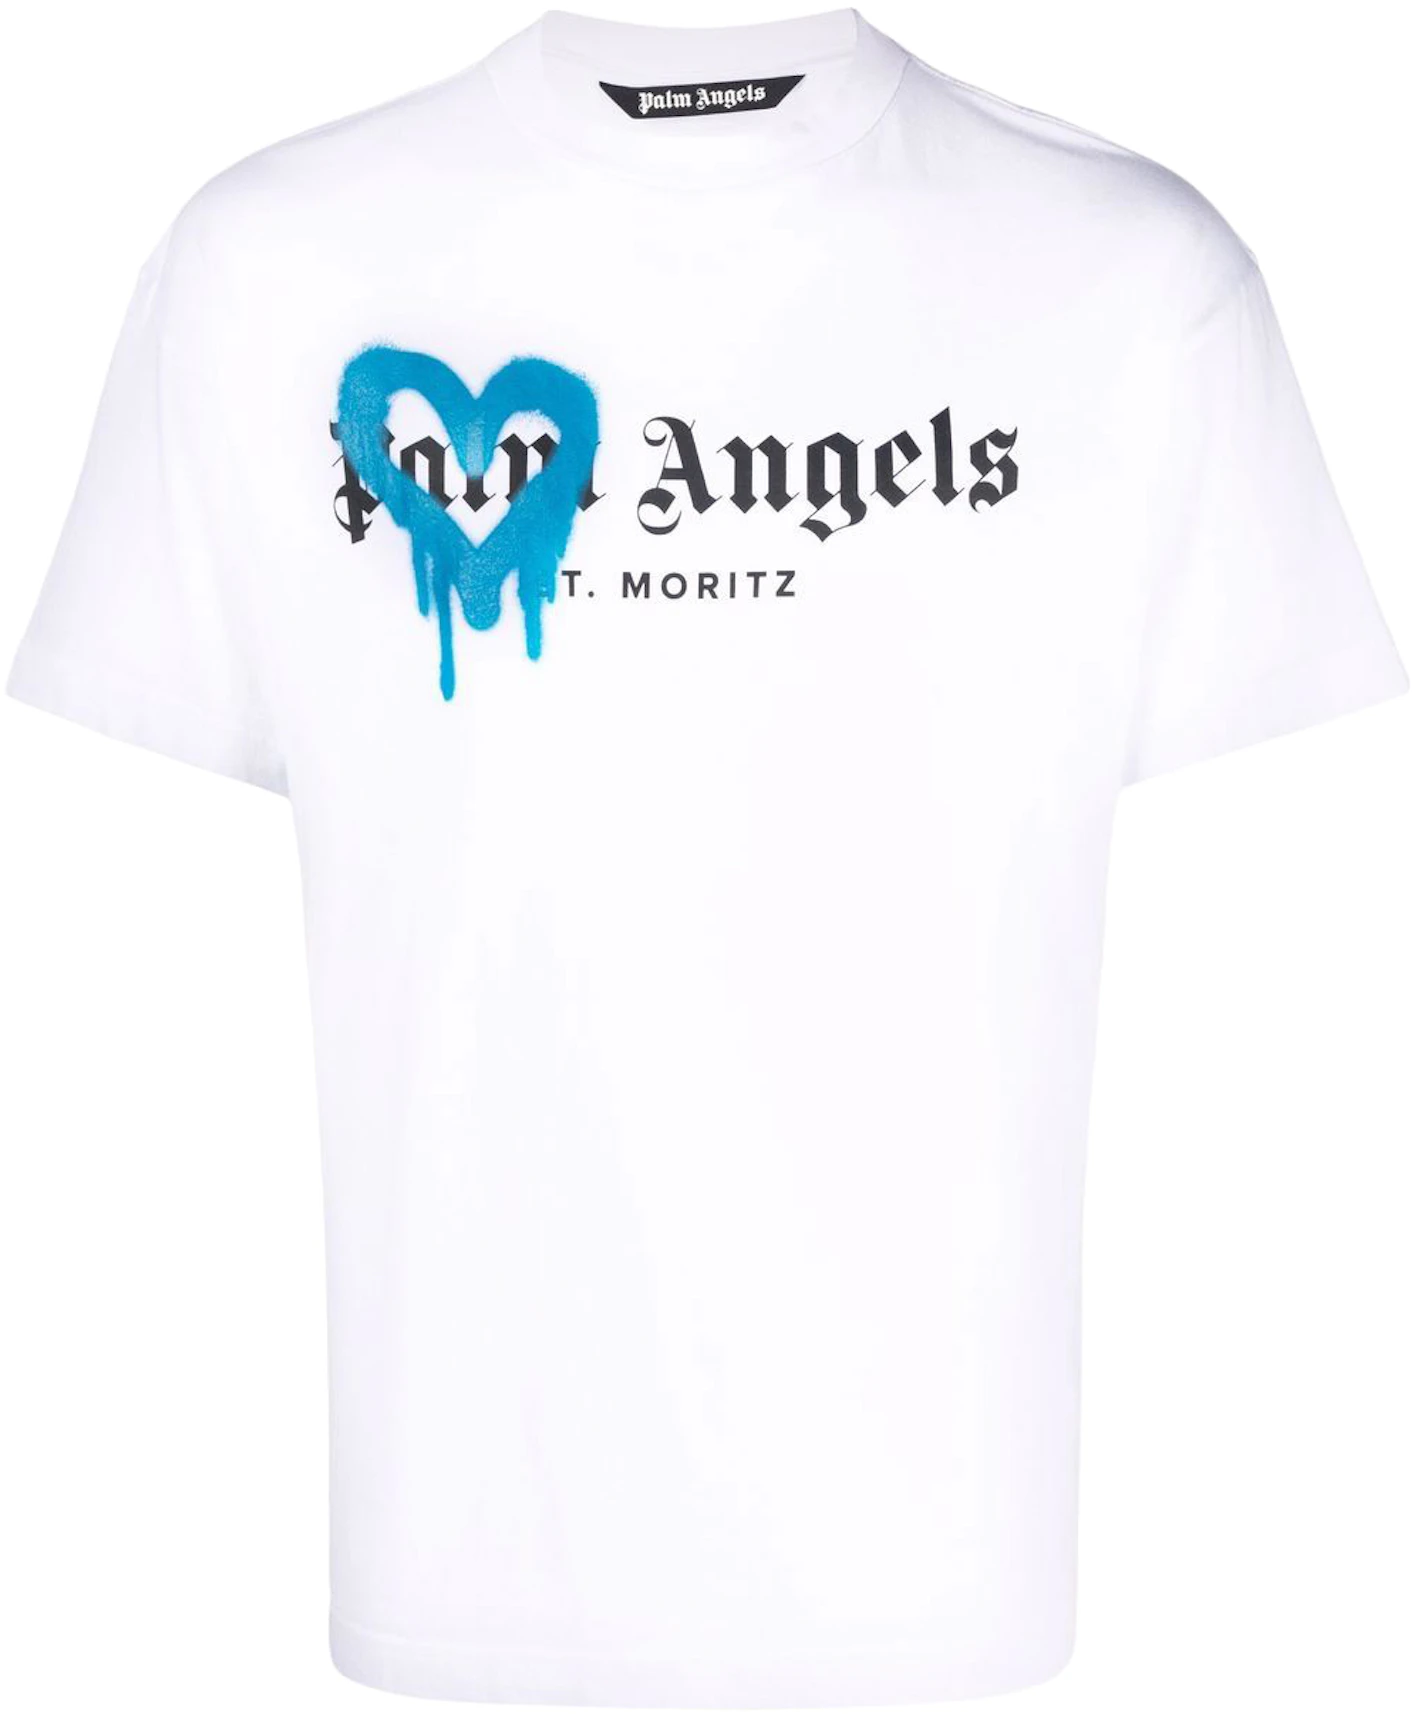 Palm Angels St Moritz Heart Sprayed Logo T-shirt White/Black/Blue ...